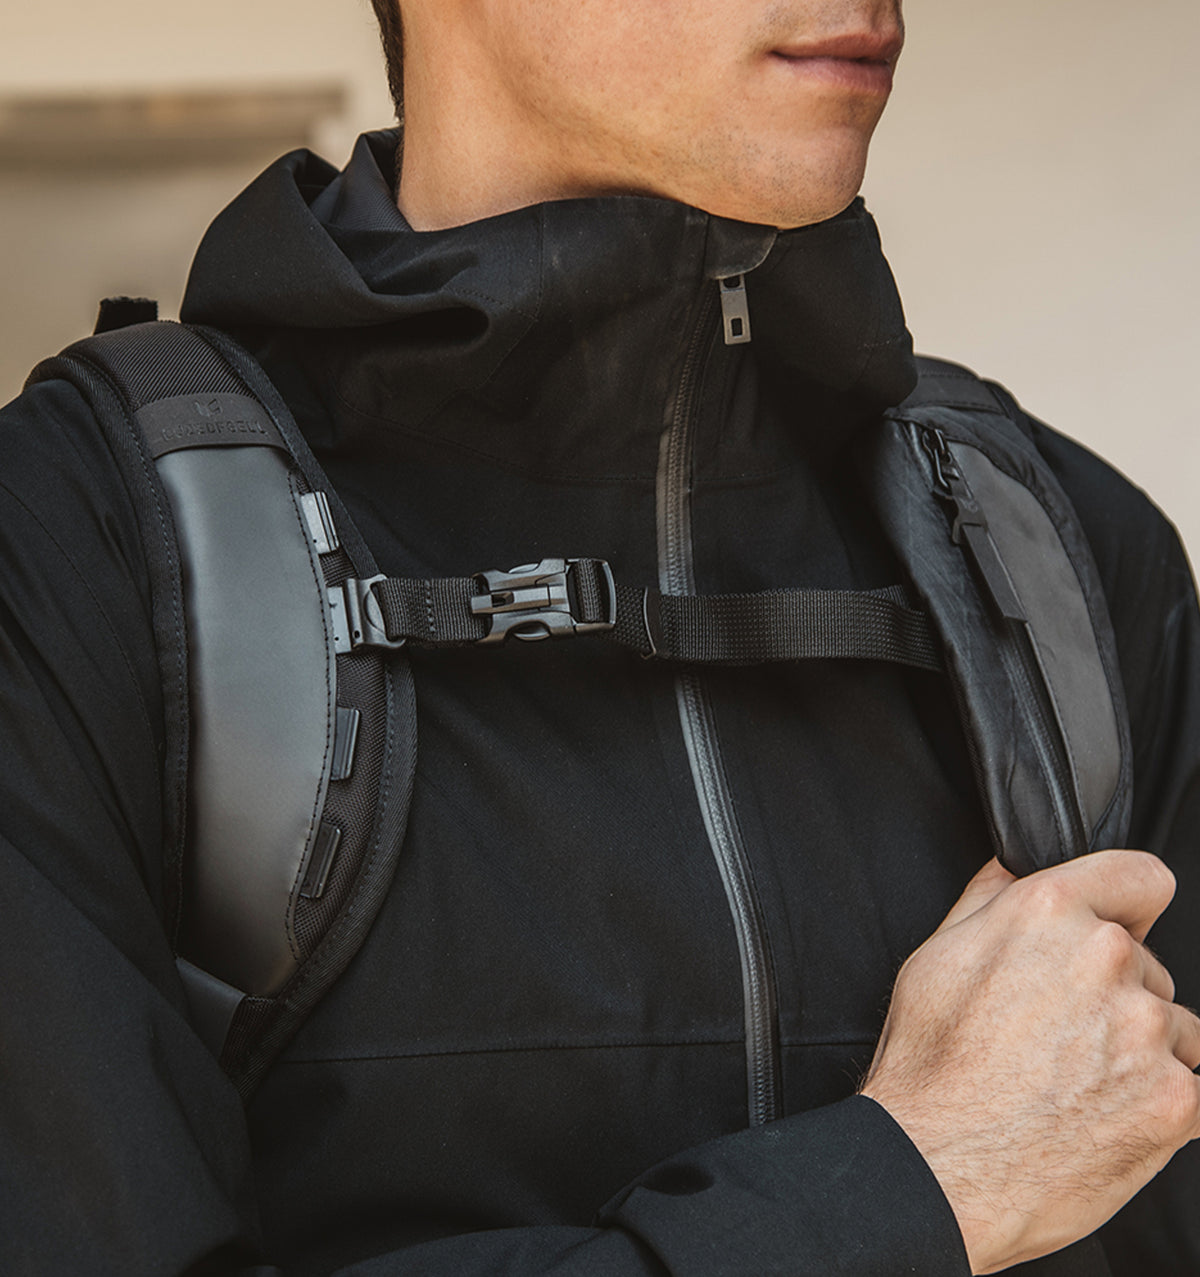 Code of Bell Backpack Harness Kit - Black